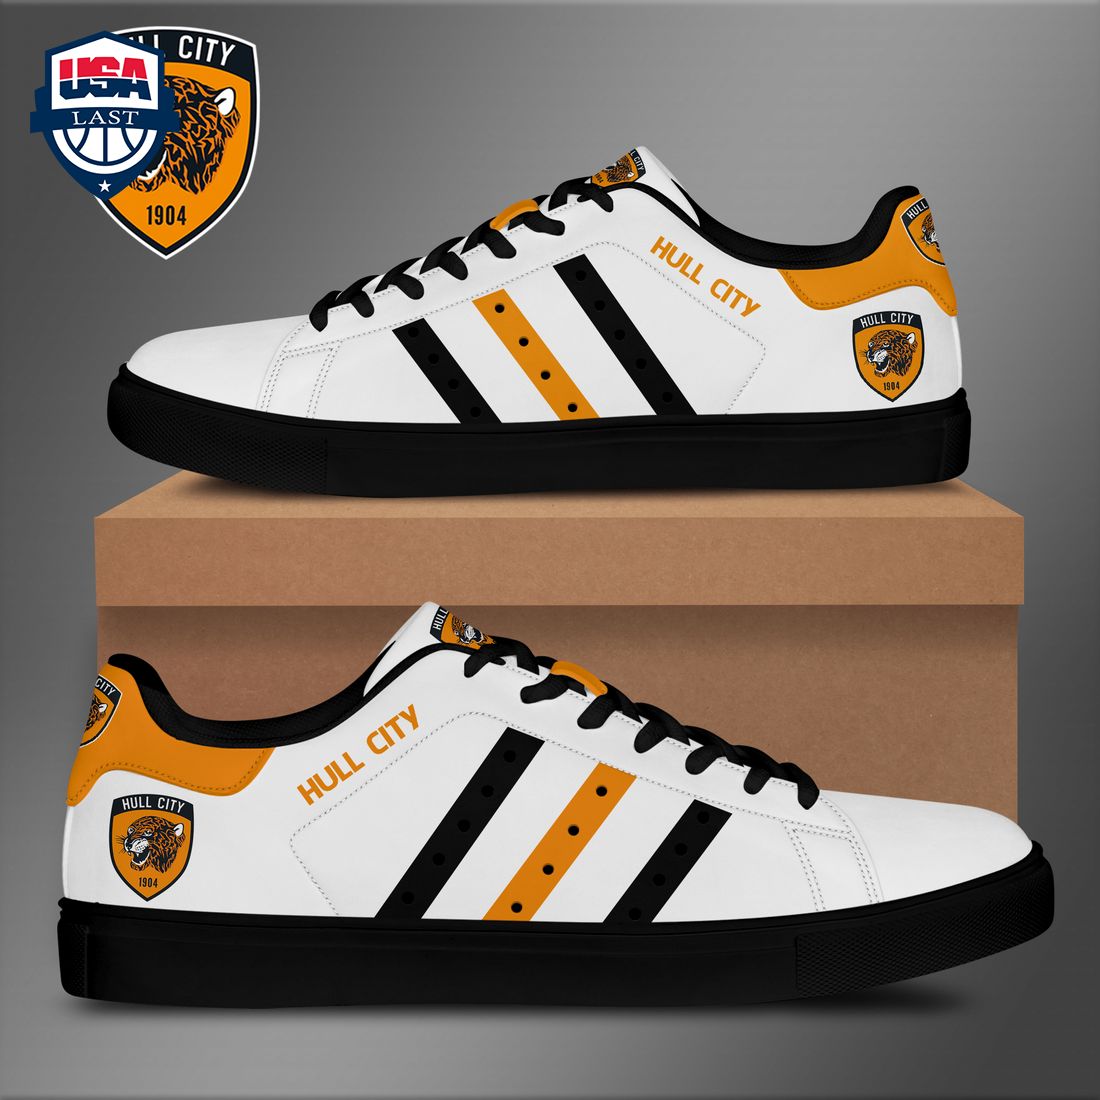 hull-city-fc-black-orange-stripes-stan-smith-low-top-shoes-1-mn073.jpg